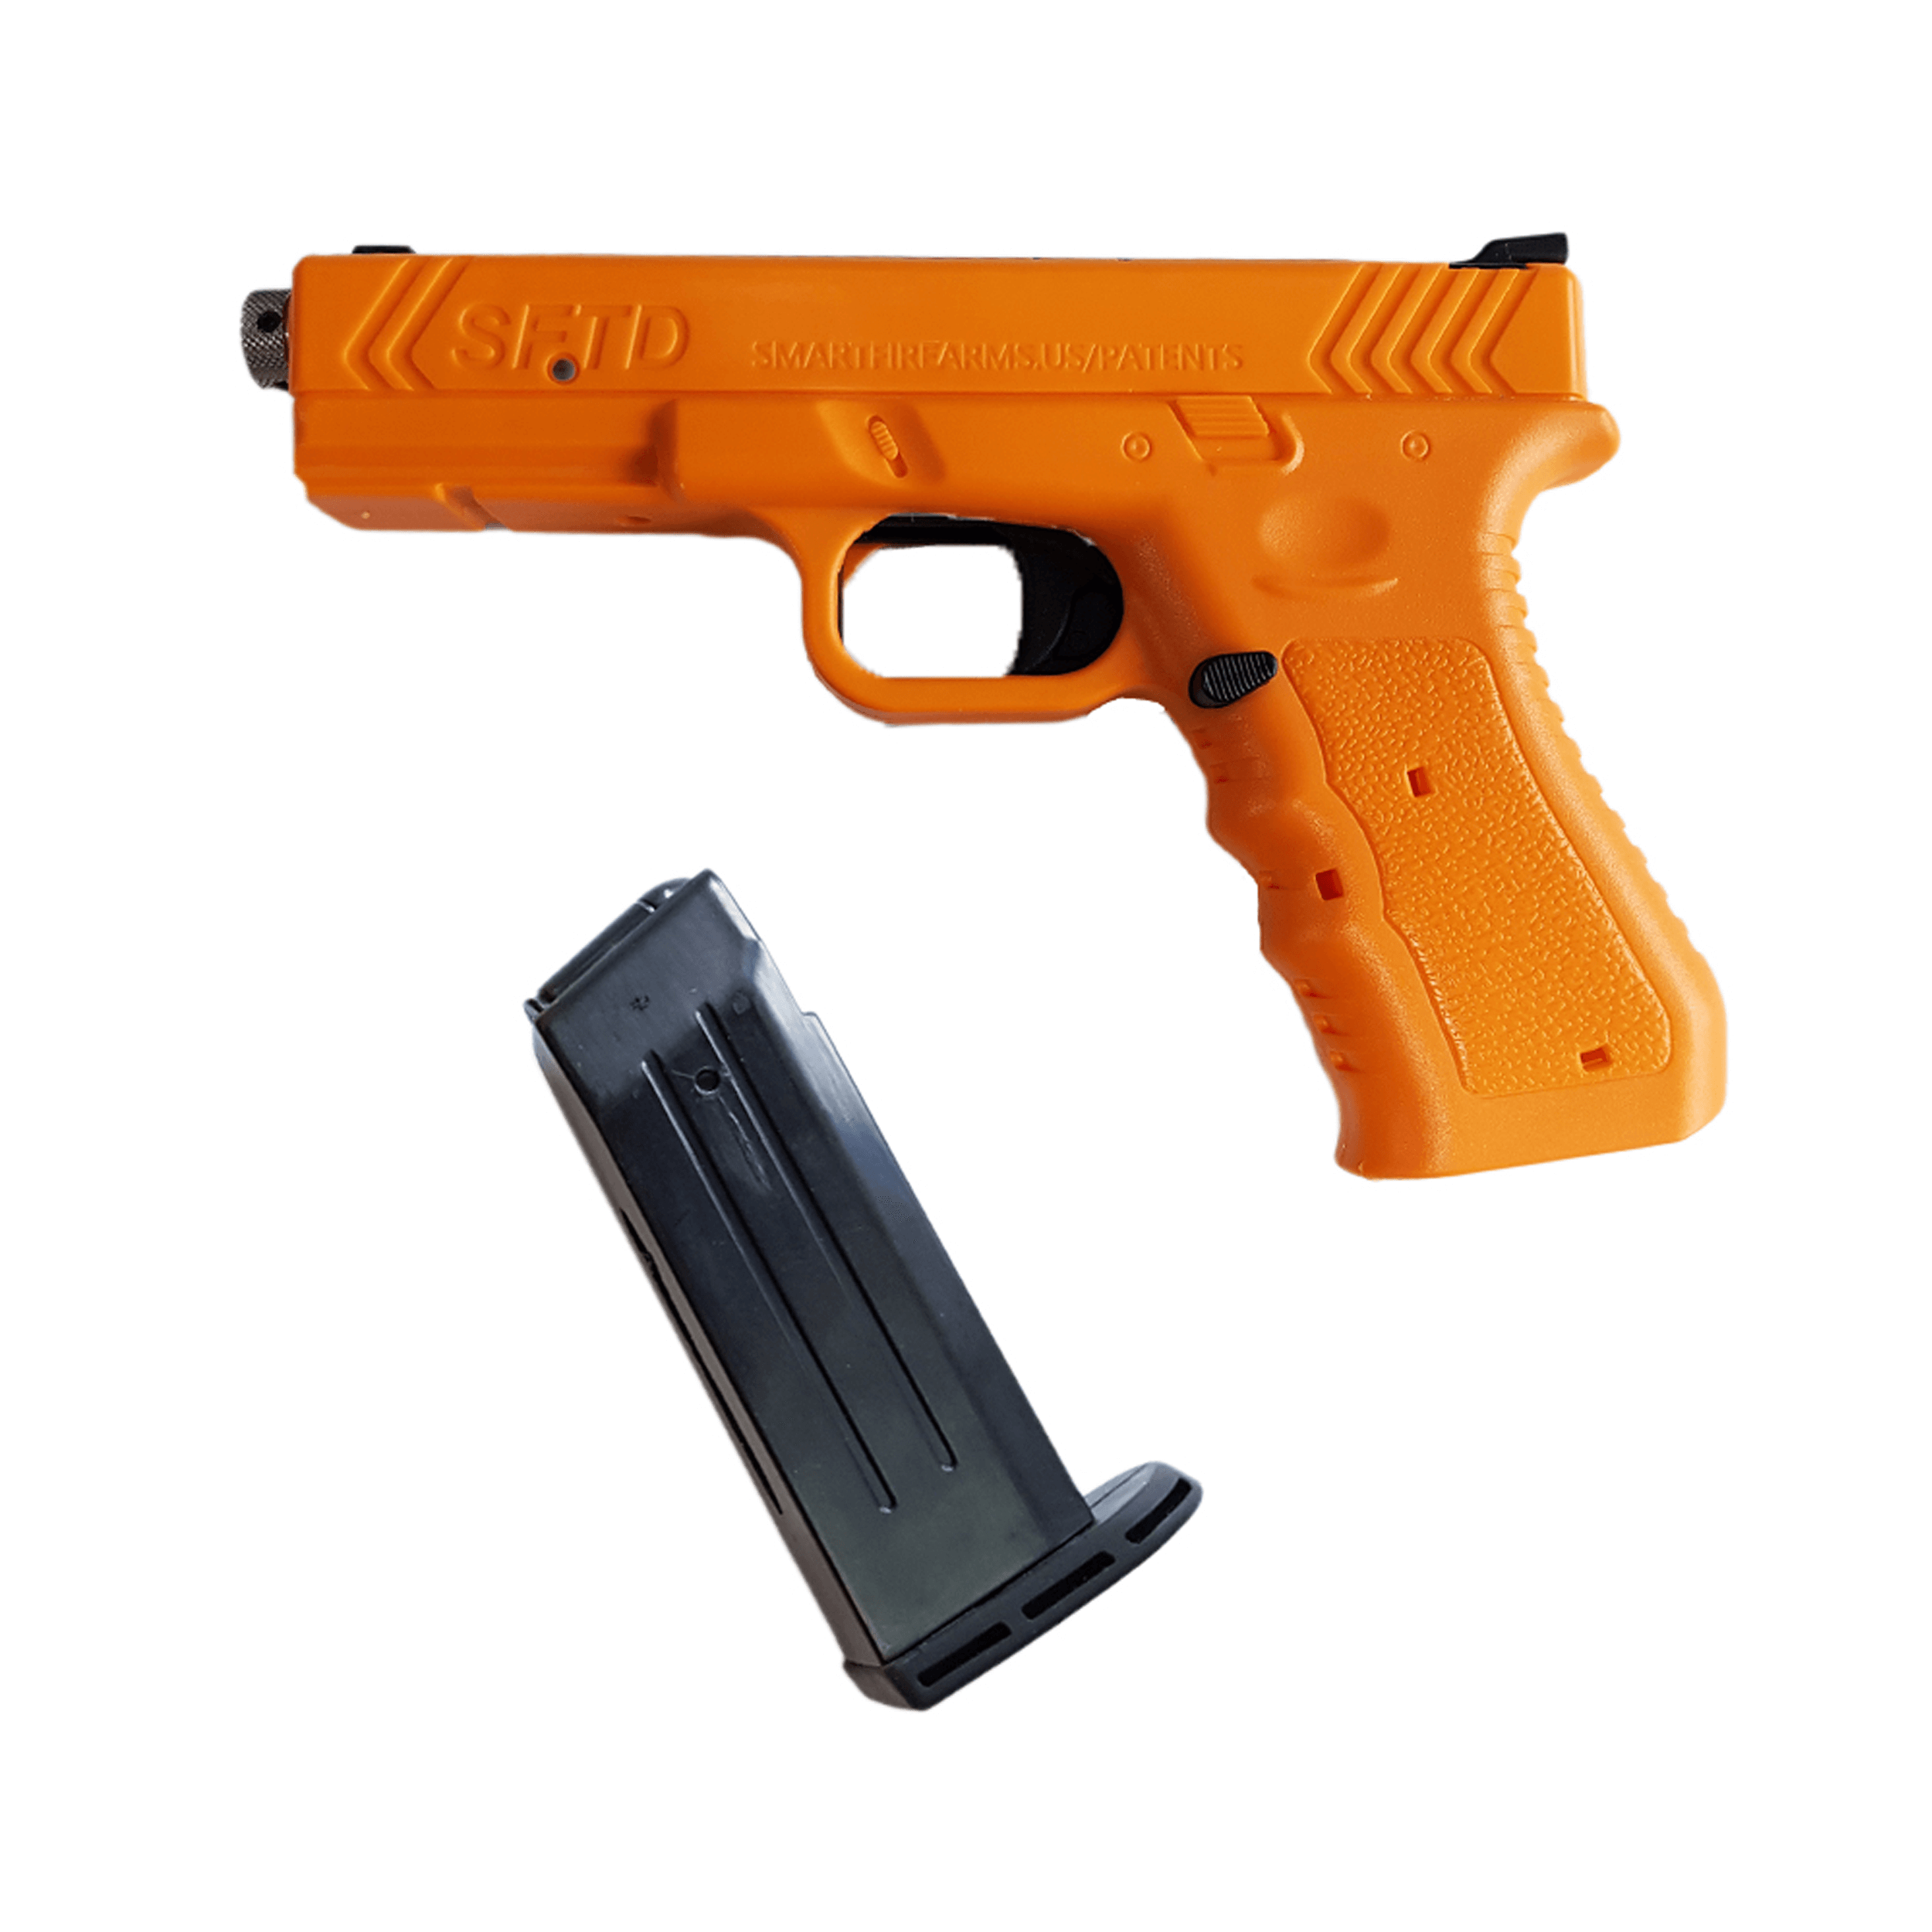 Glock 17 kompatible Pro Laser Training Pistol